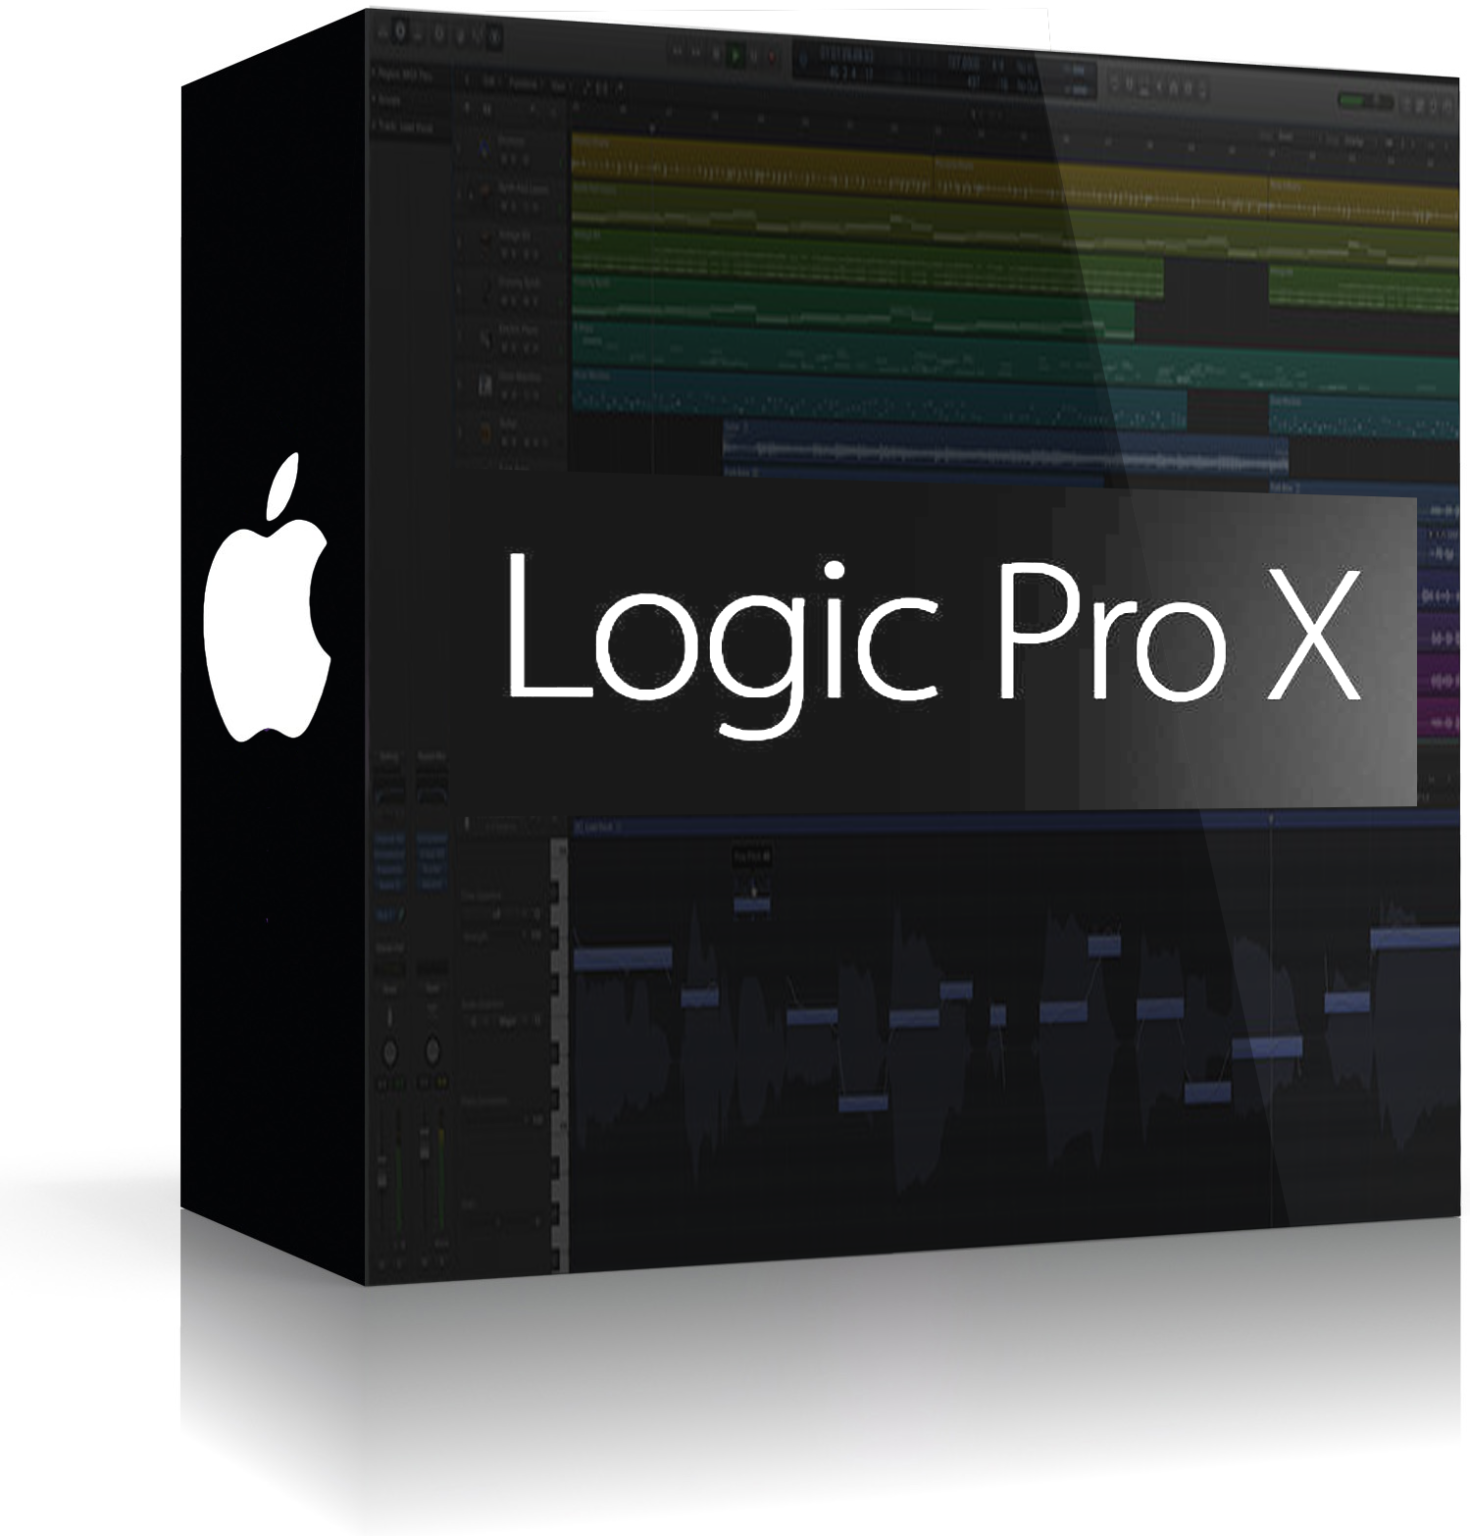 Logic Pro X 10.4.4 download